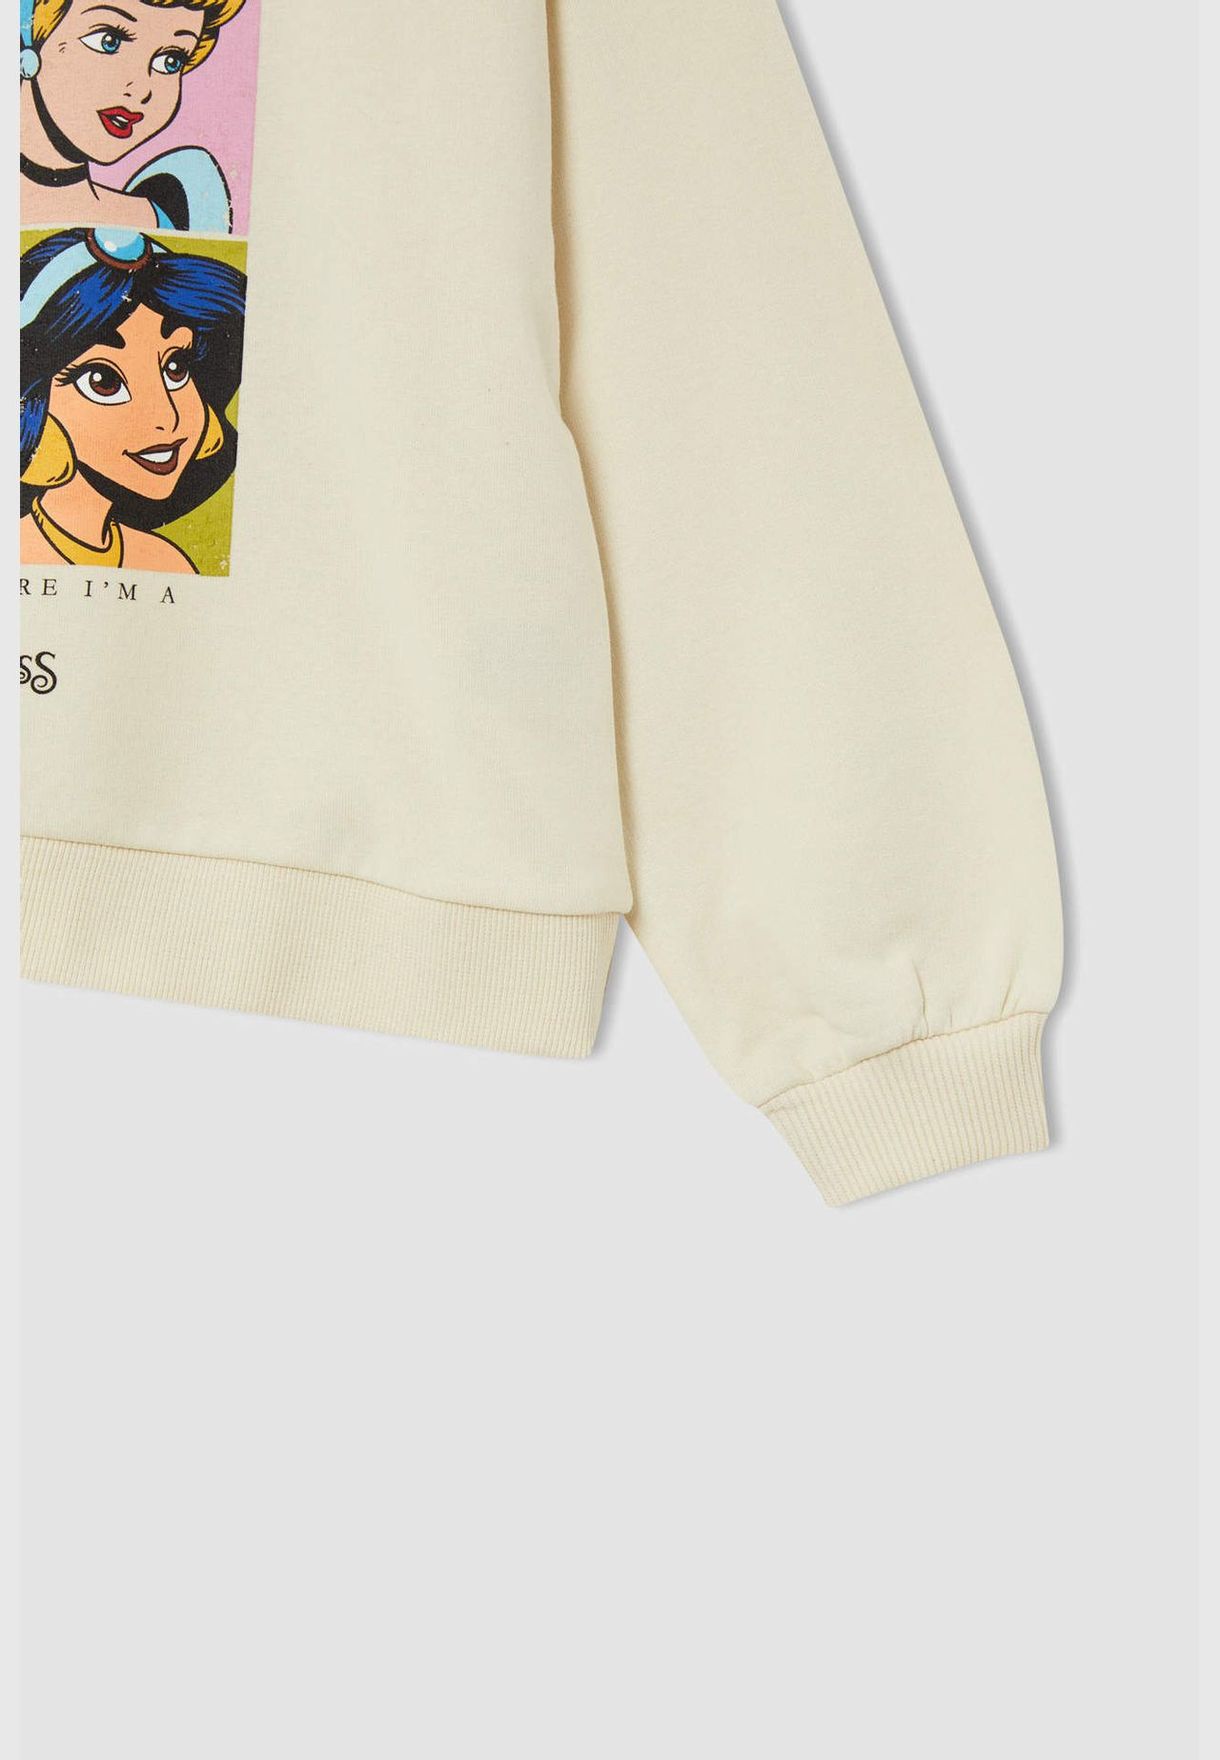 Disney Princess Licenced Long Sleeve Sweatshirt & Sweatpants Set